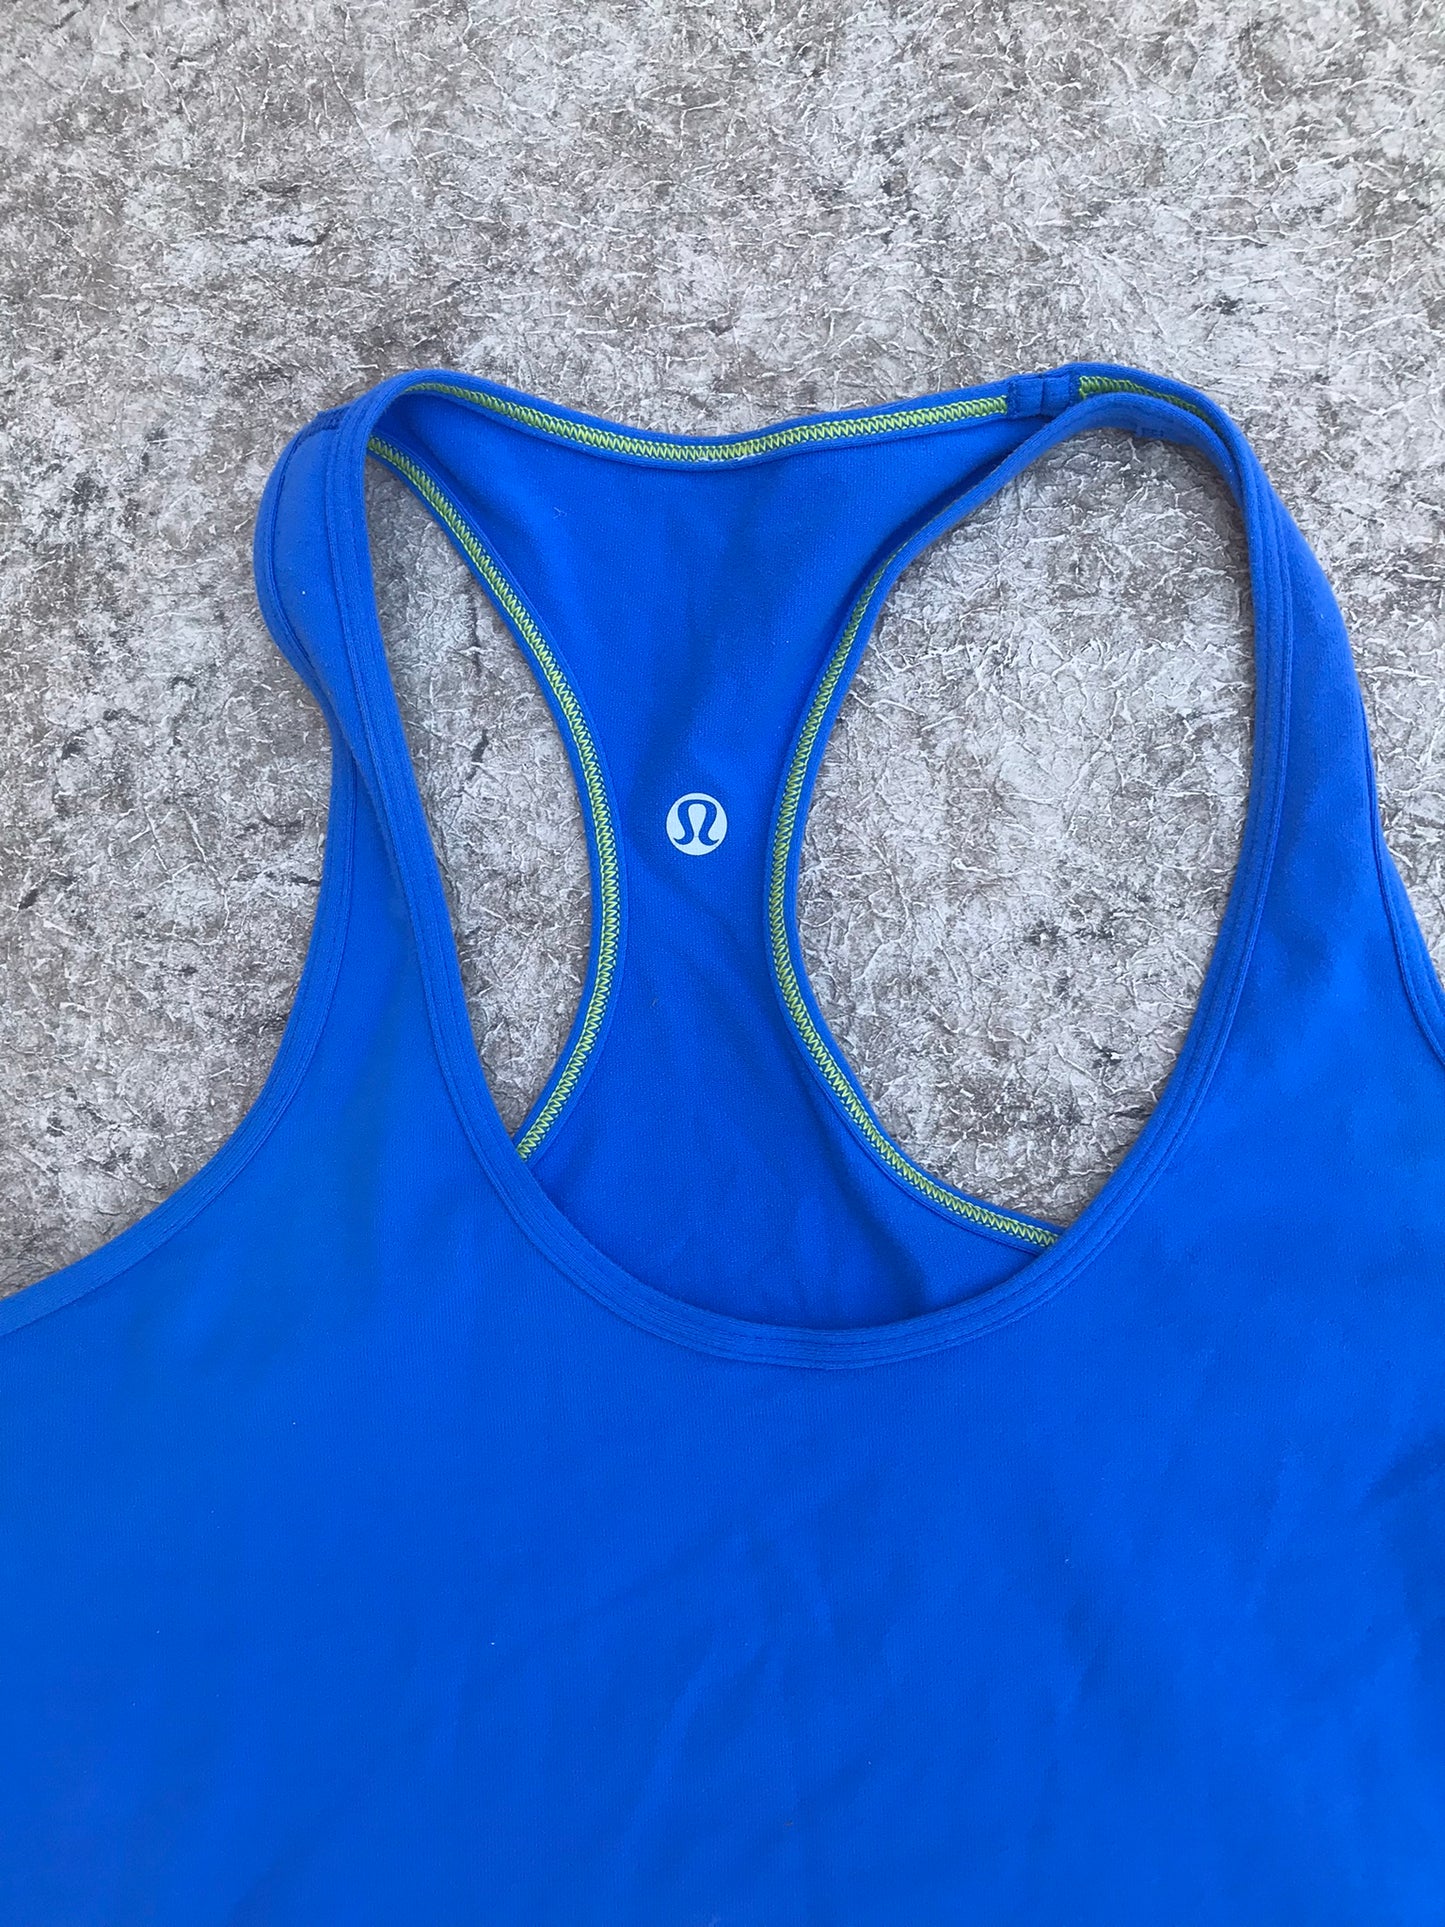 LuLuLemon Ladies Size Medium Yoga Workout Tank Top Blue Like New